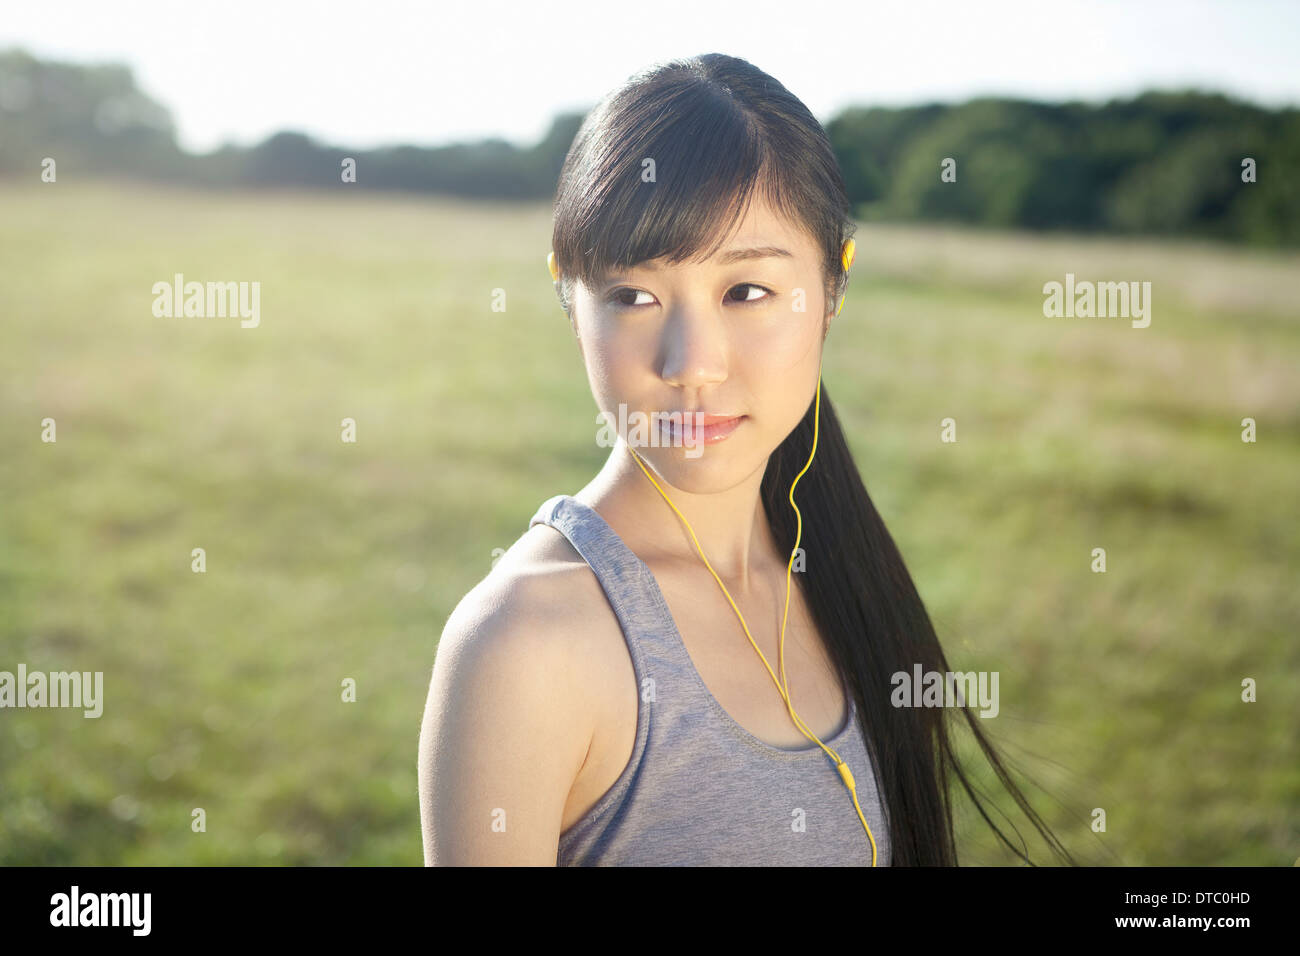 Portrait of young female runner wearing earphones Banque D'Images